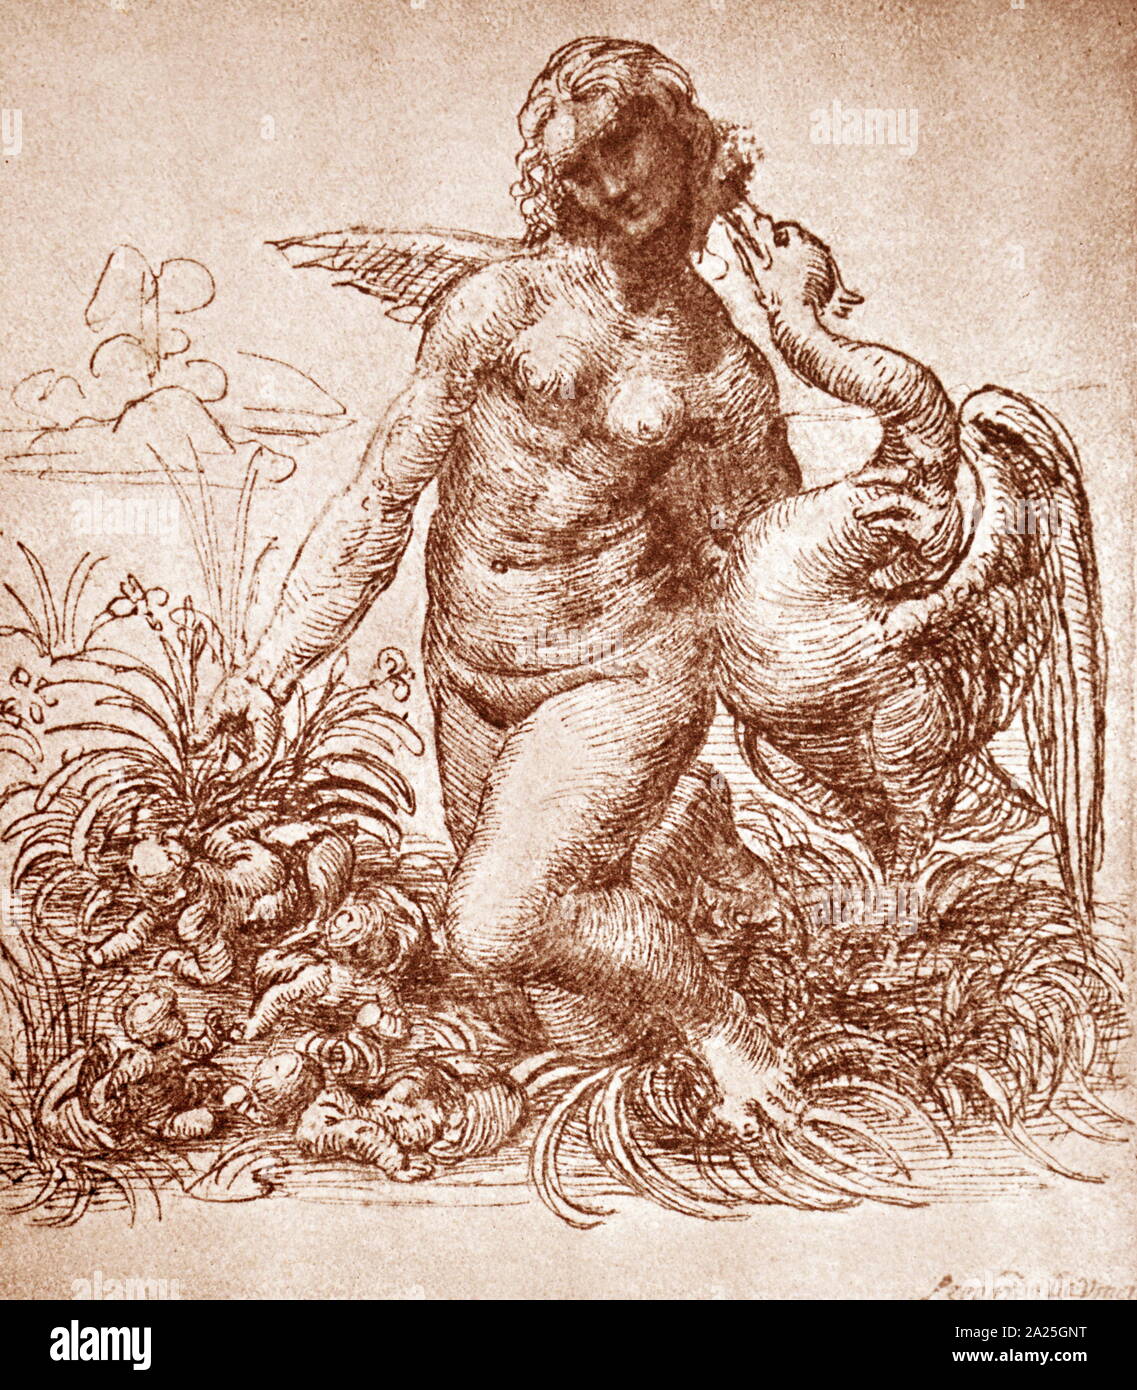 Étude de Léda et le Cygne par Leonardo da Vinci. Leonardo di ser Piero da  Vinci (1452-1519) un grand penseur italien de la Renaissance Photo Stock -  Alamy